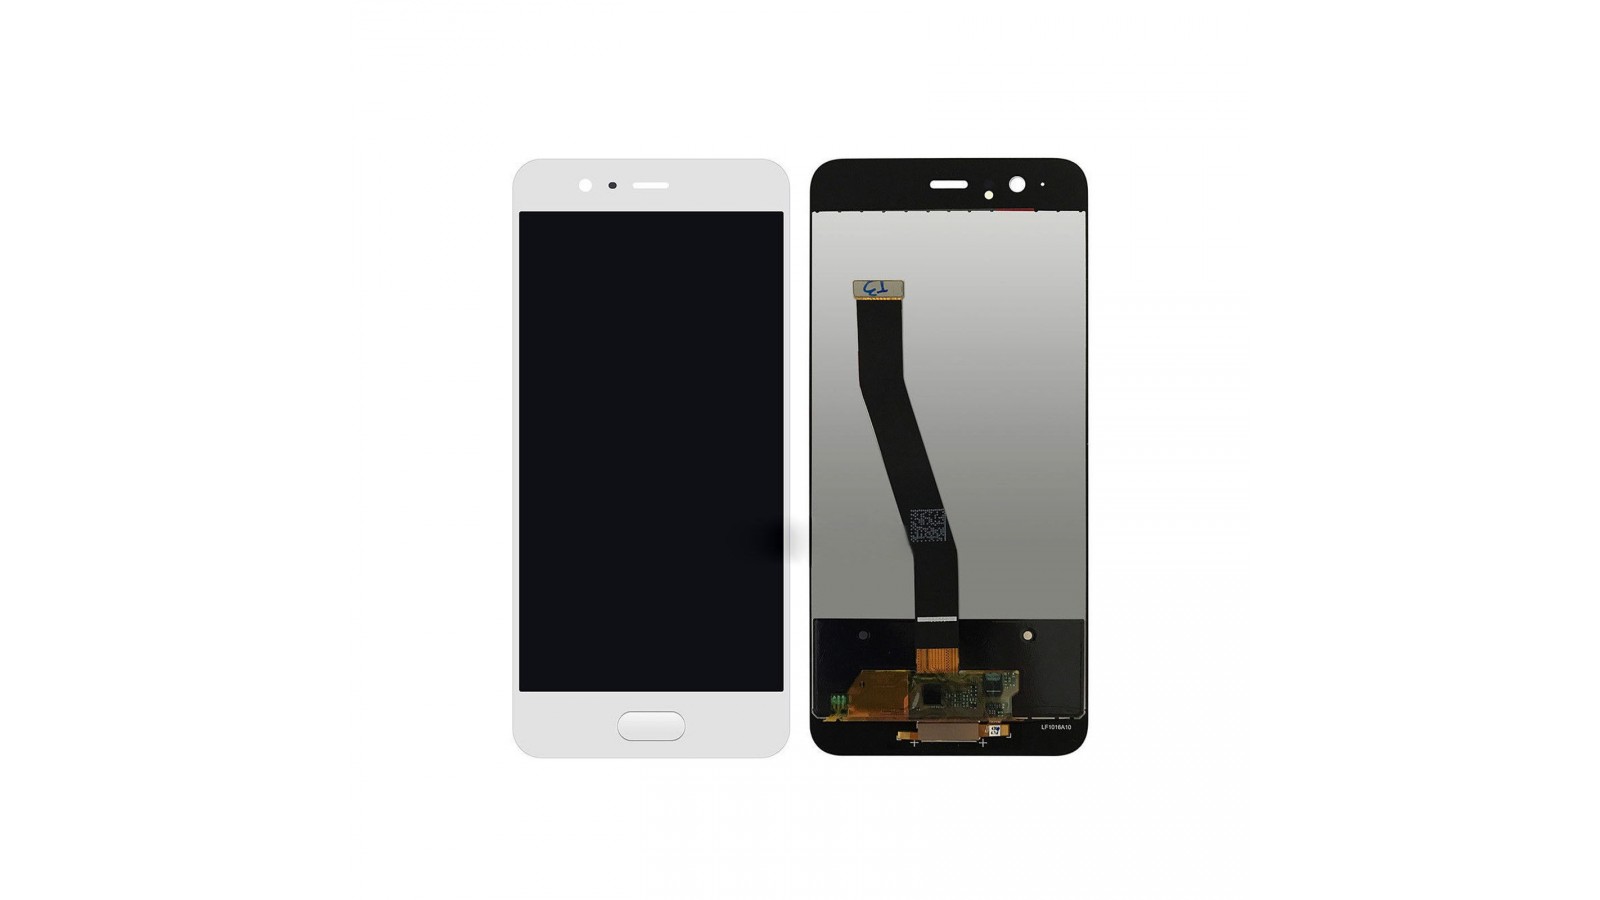 Display + Touch Screen per Huawei P10 bianco VTR-L09